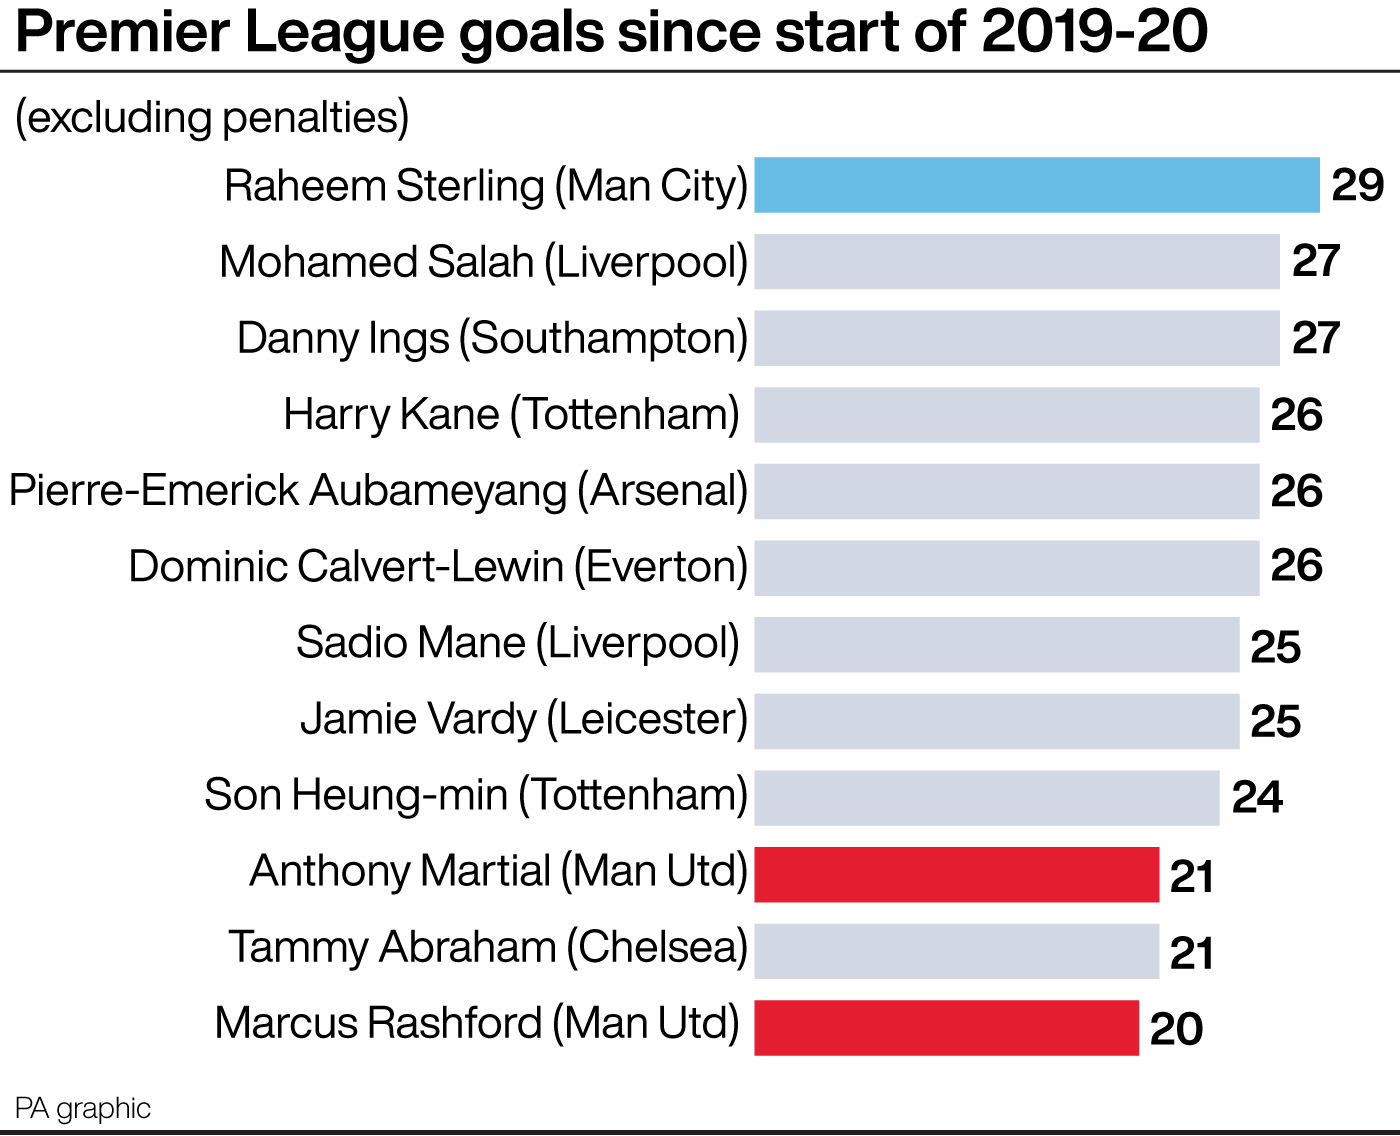 Premier League goals excluding penalties since start of 2019-20